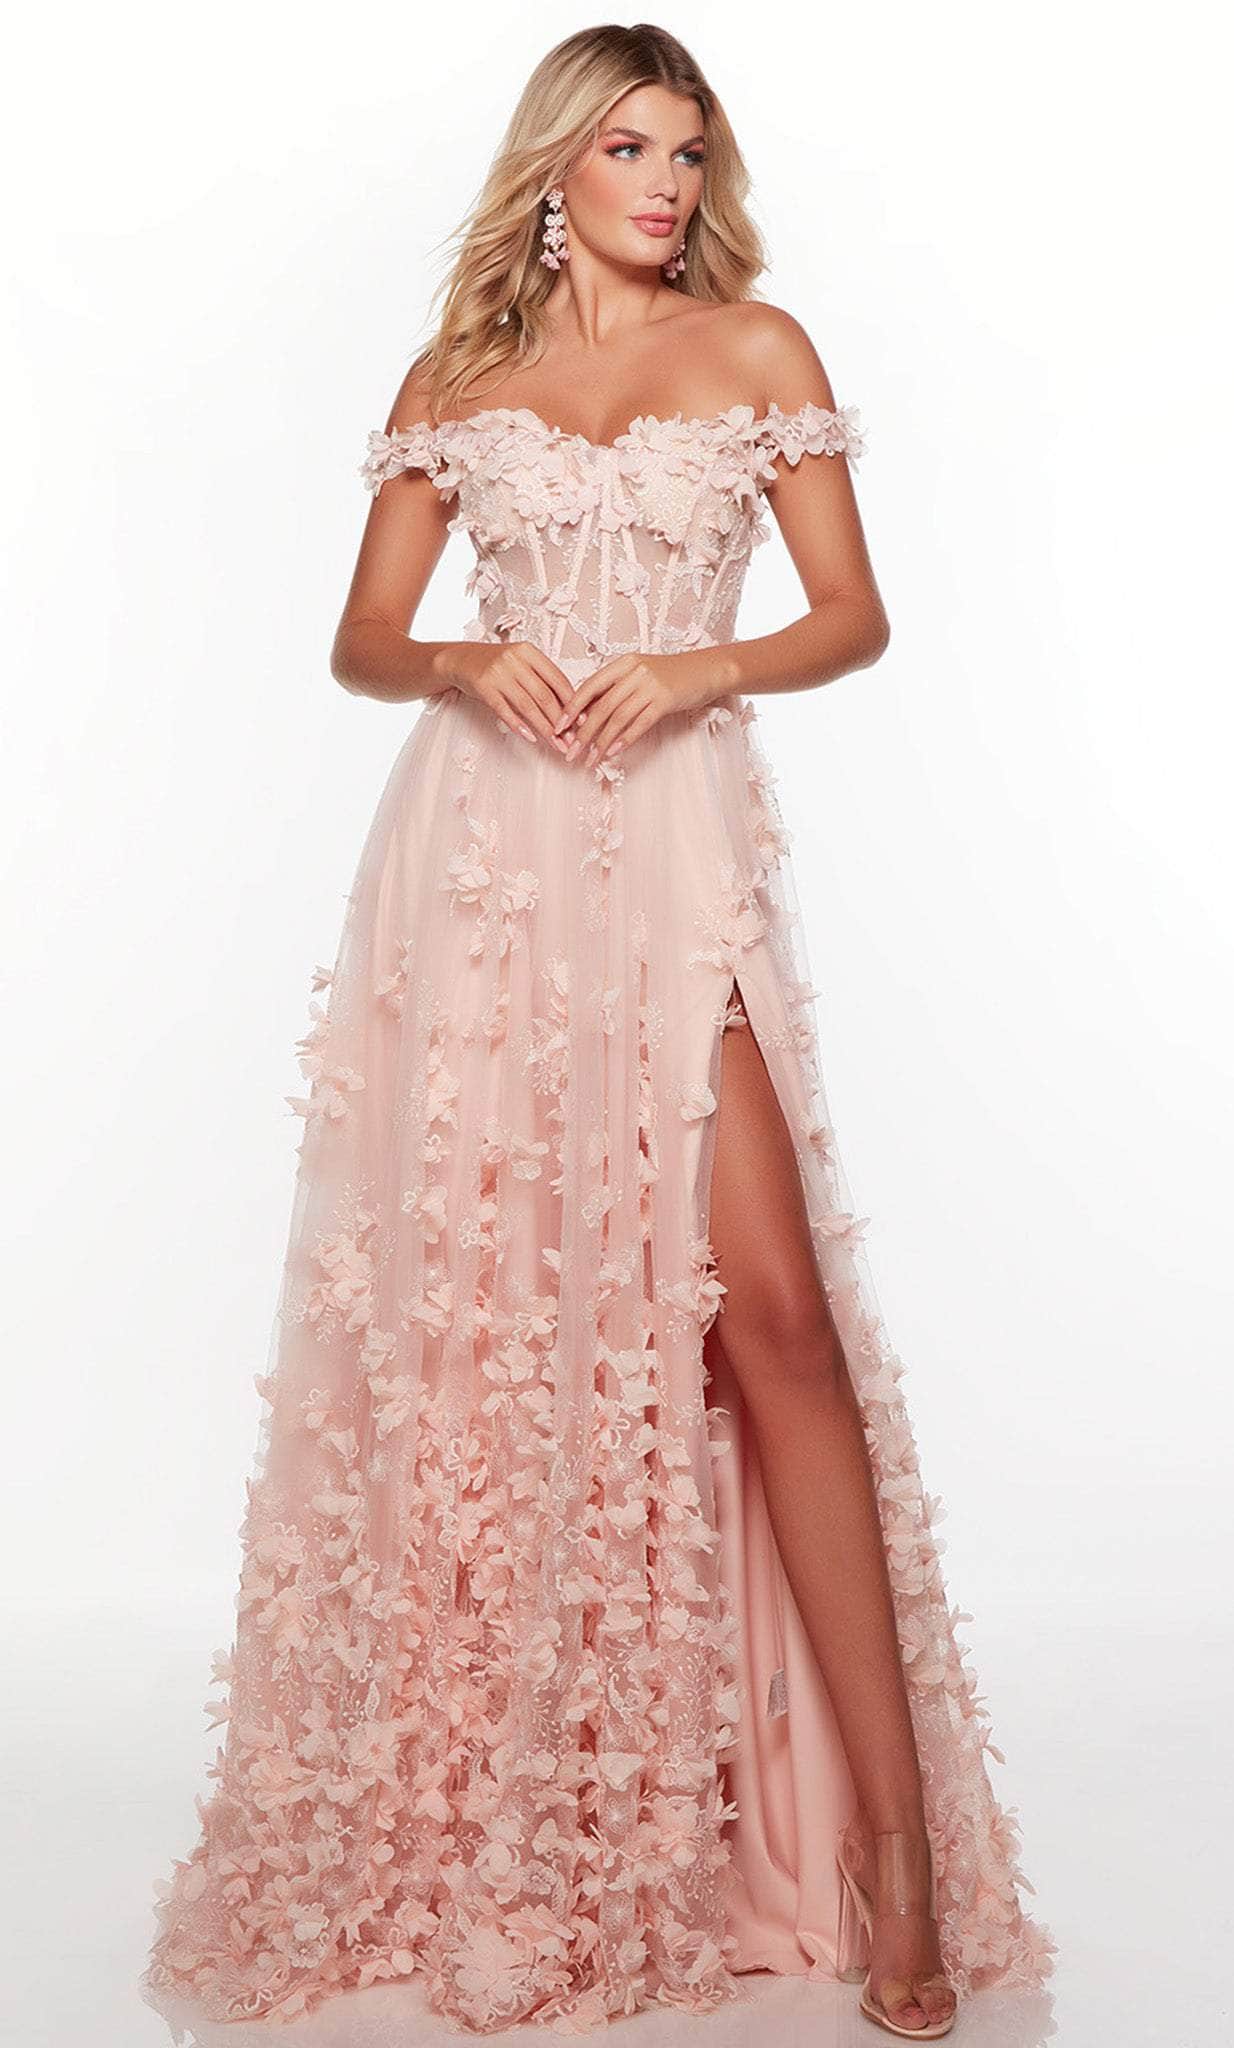 Image of Alyce Paris 61308 - Floral Plus Size Prom Dress